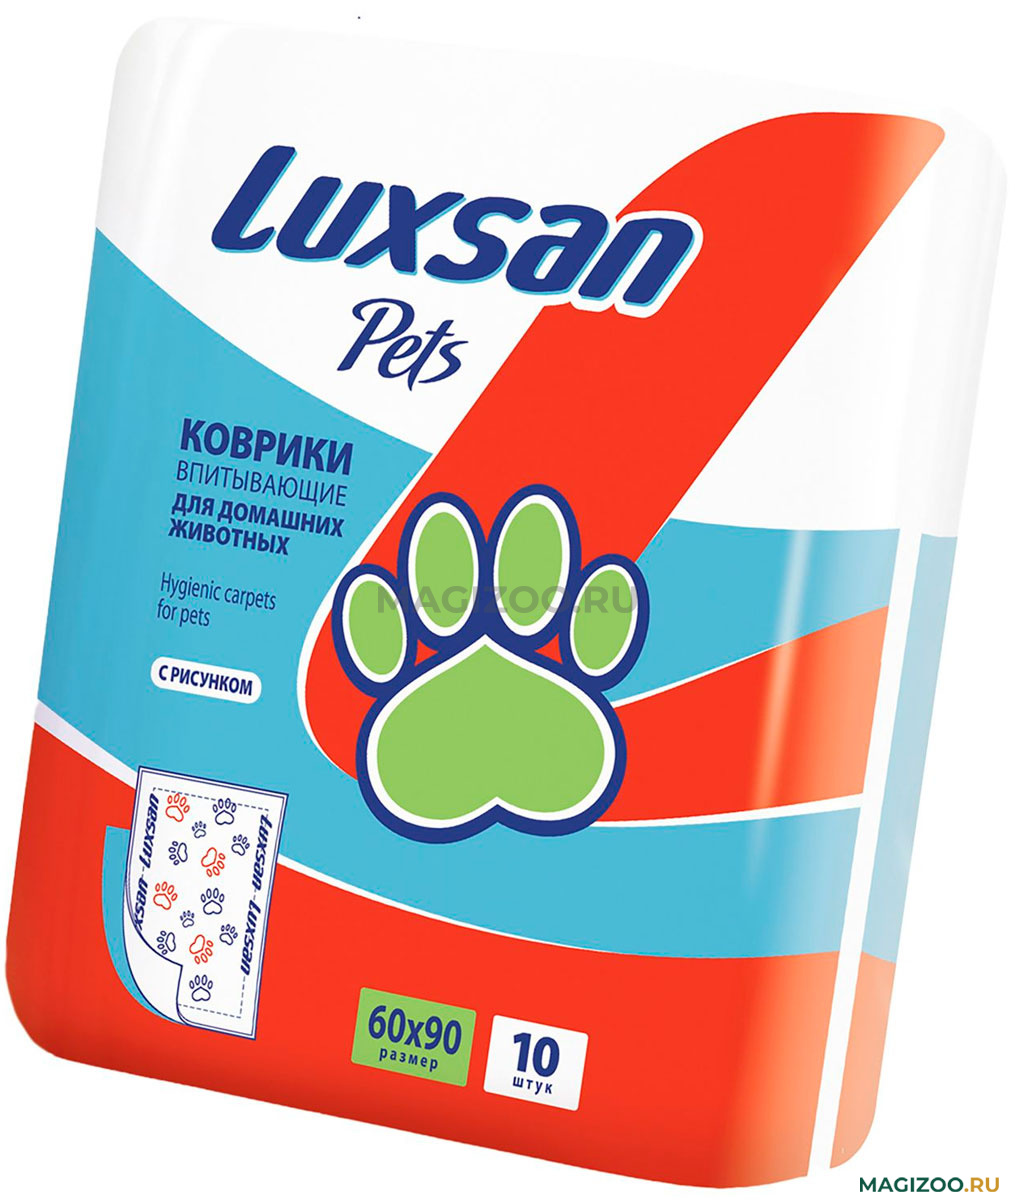 Пеленки для собак 60х90 купить. Пеленка Luxsan впитывающая премиум 60х90 см 5 шт. Luxsan пеленки 60 60. Luxsan Pets коврики впитывающие для животных 60х90 с рисунком. Пеленки для животных 60х90 Luxsan.